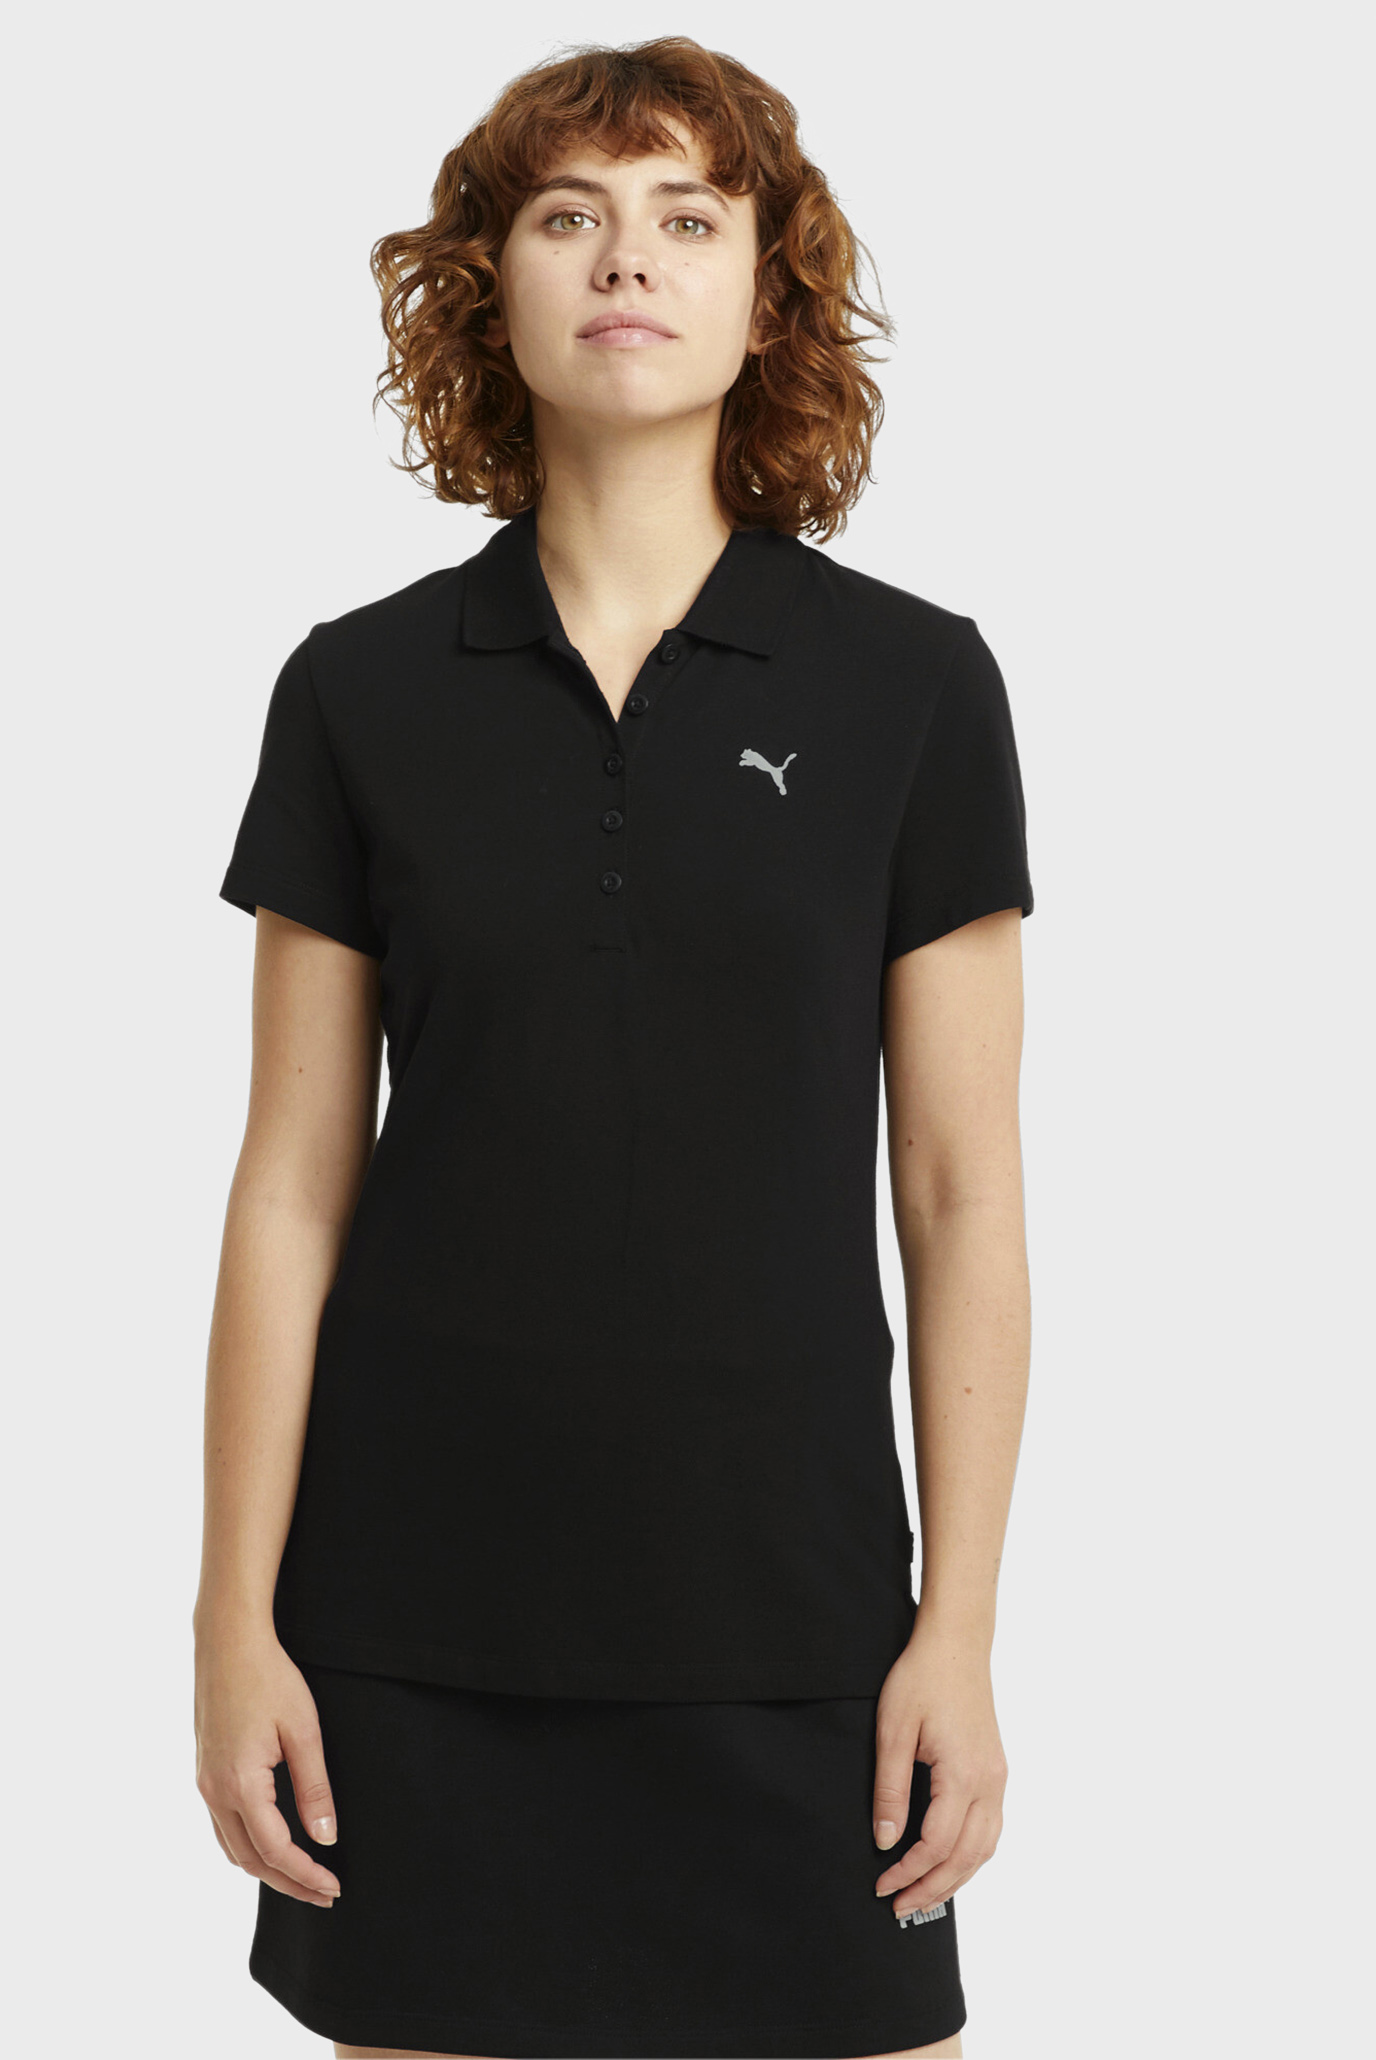 Жіноче чорне поло Essentials Women's Polo Shirt 1